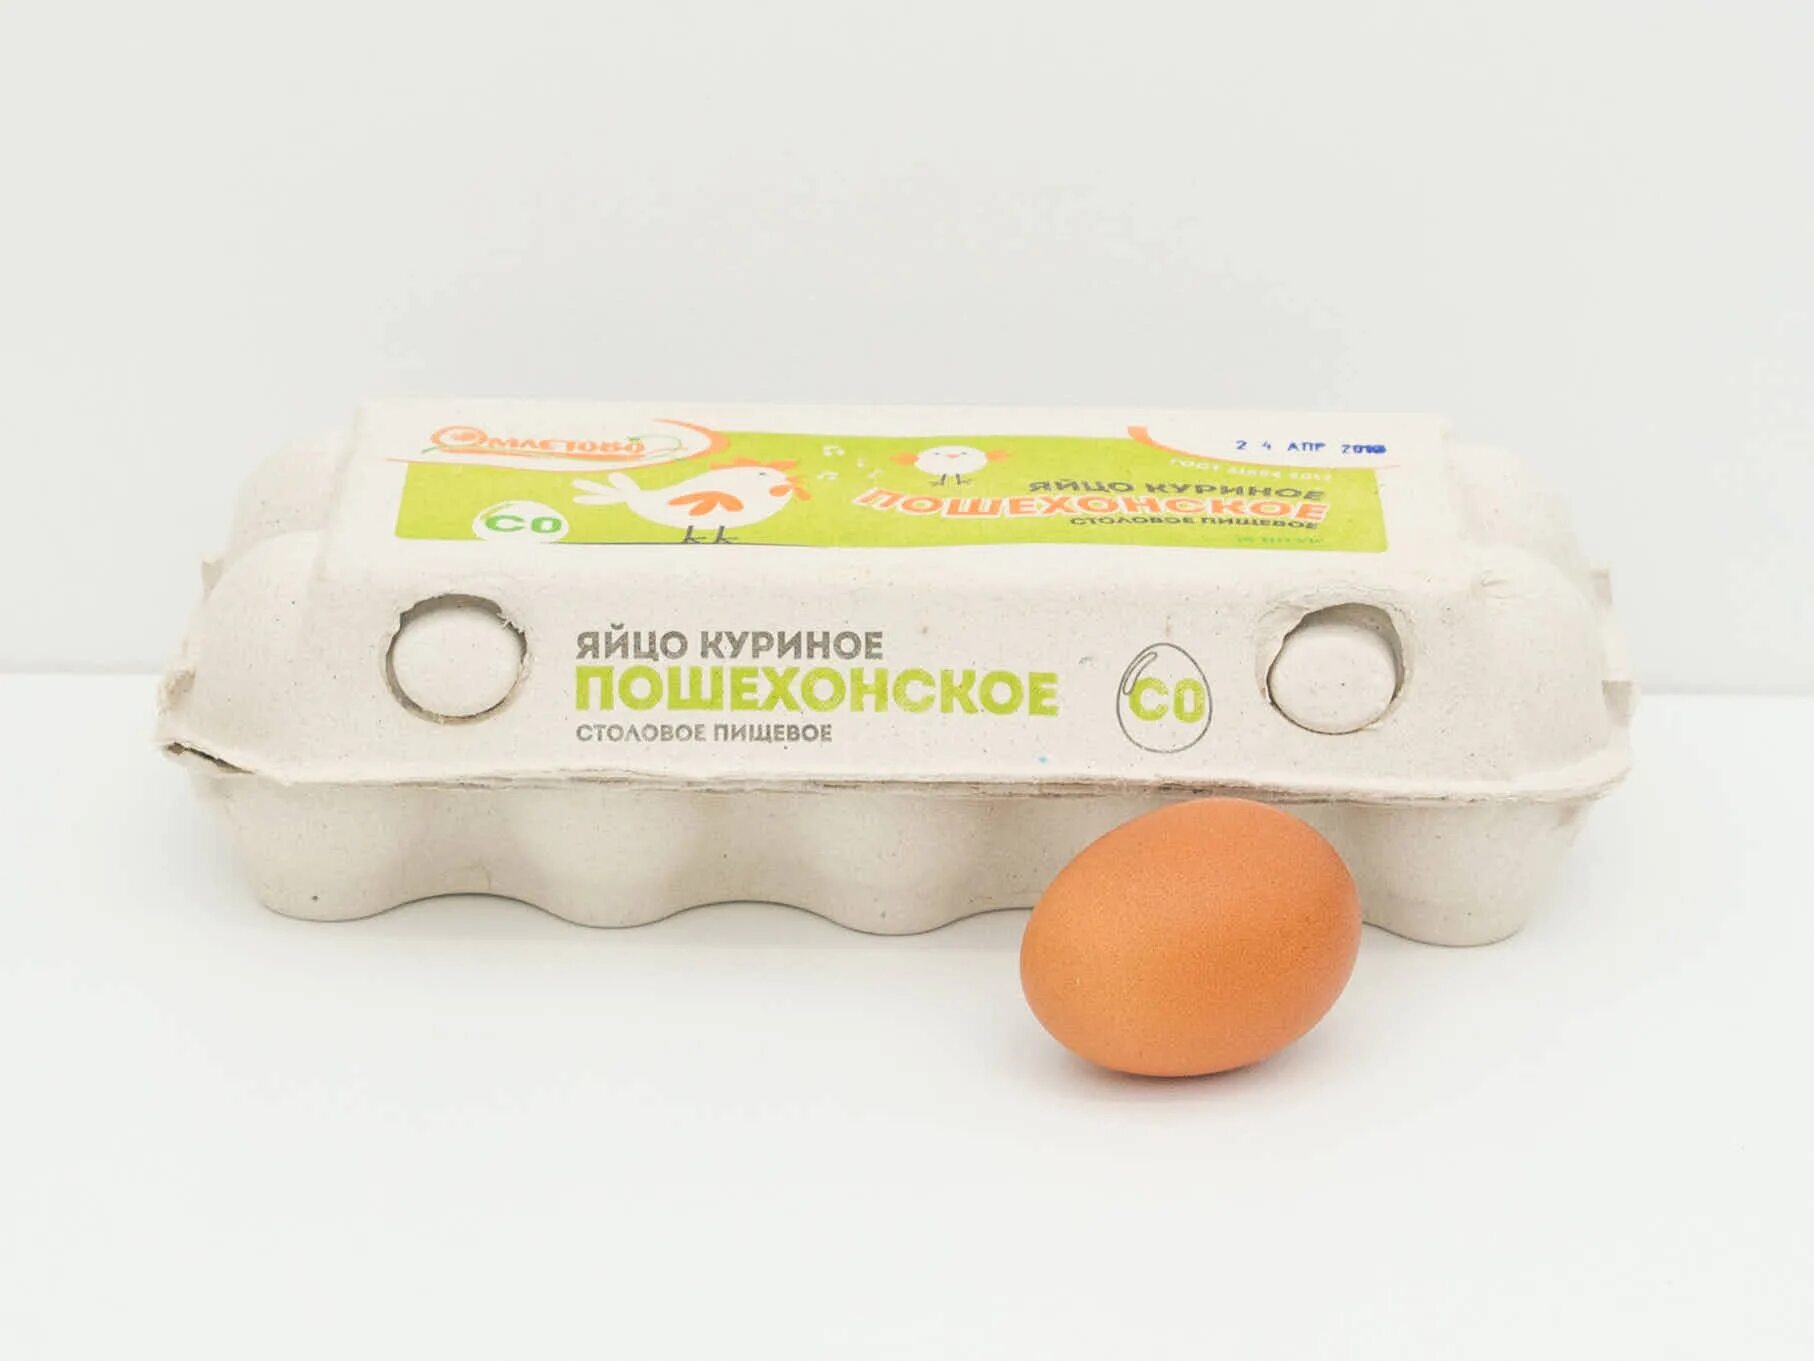 Яйцо куриное термо 10 шт. Яйцо куриное с0. Яйцо 10шт куриное со в упаковке. Яйцо куриное (10 штук).